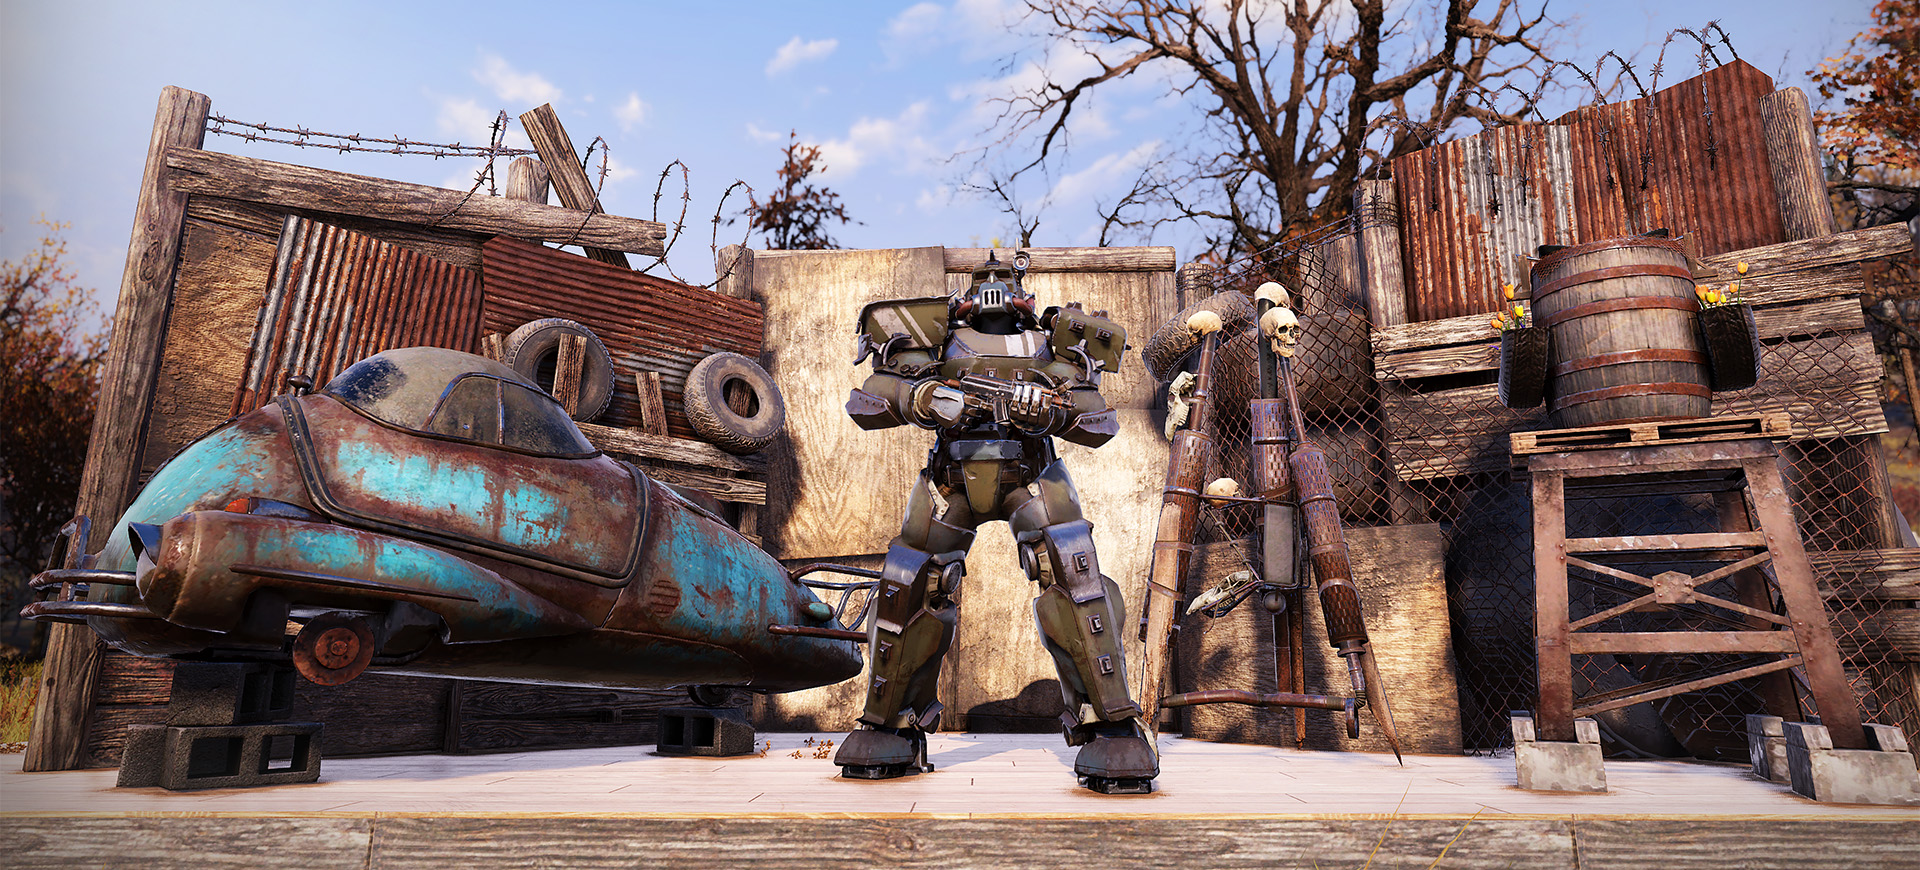 Fallout 4 прототип боевого стража на свалке фото 11